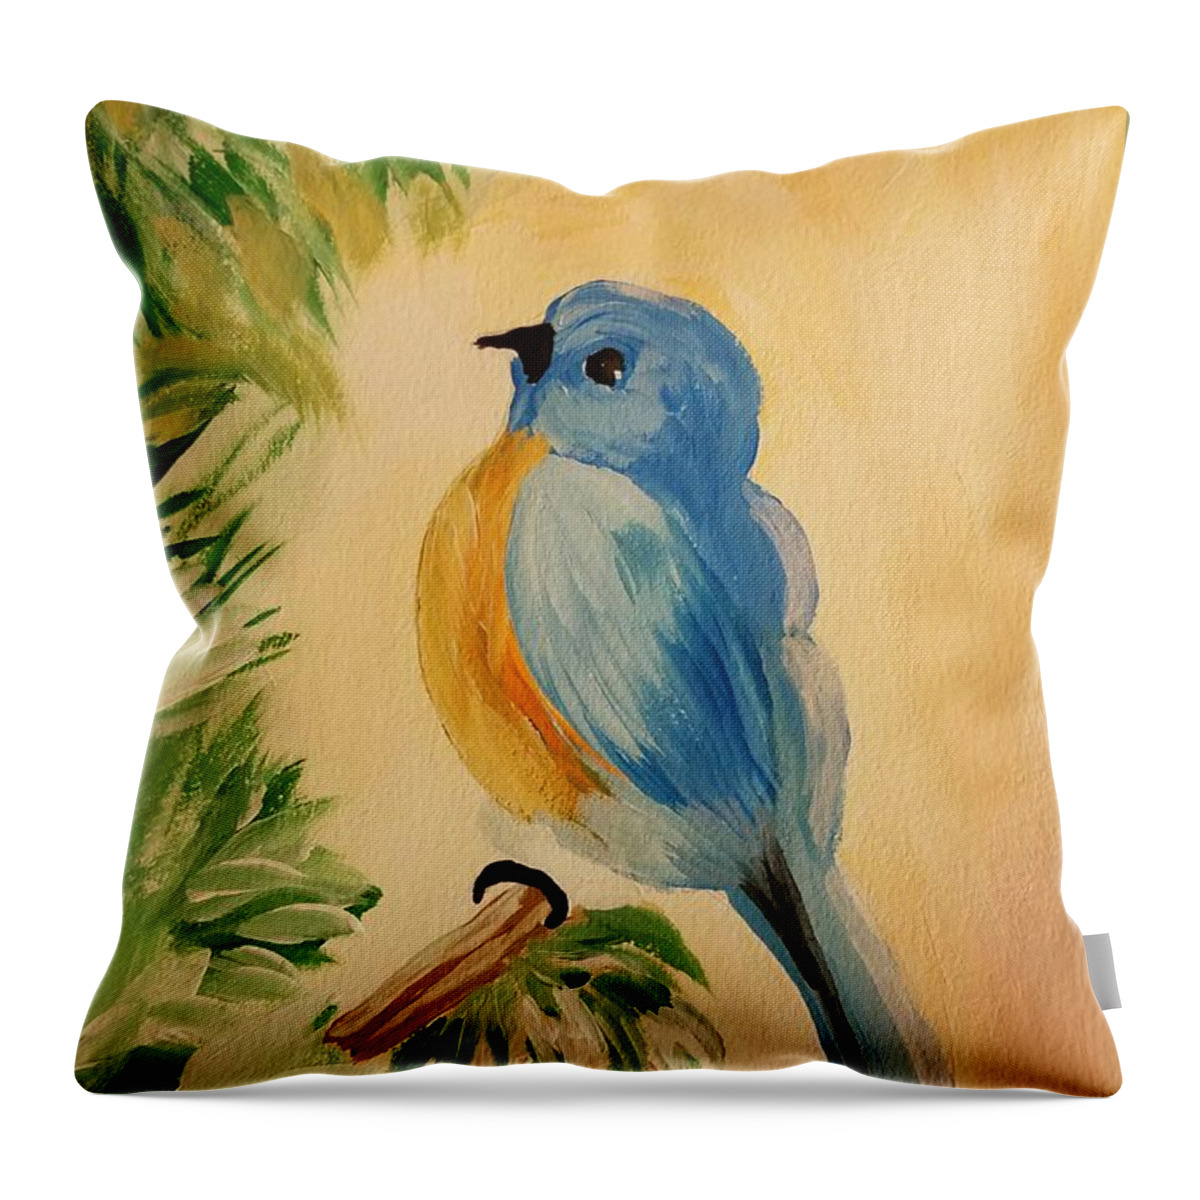 Bluebird Throw Pillow featuring the painting Bluebird by Maria Urso